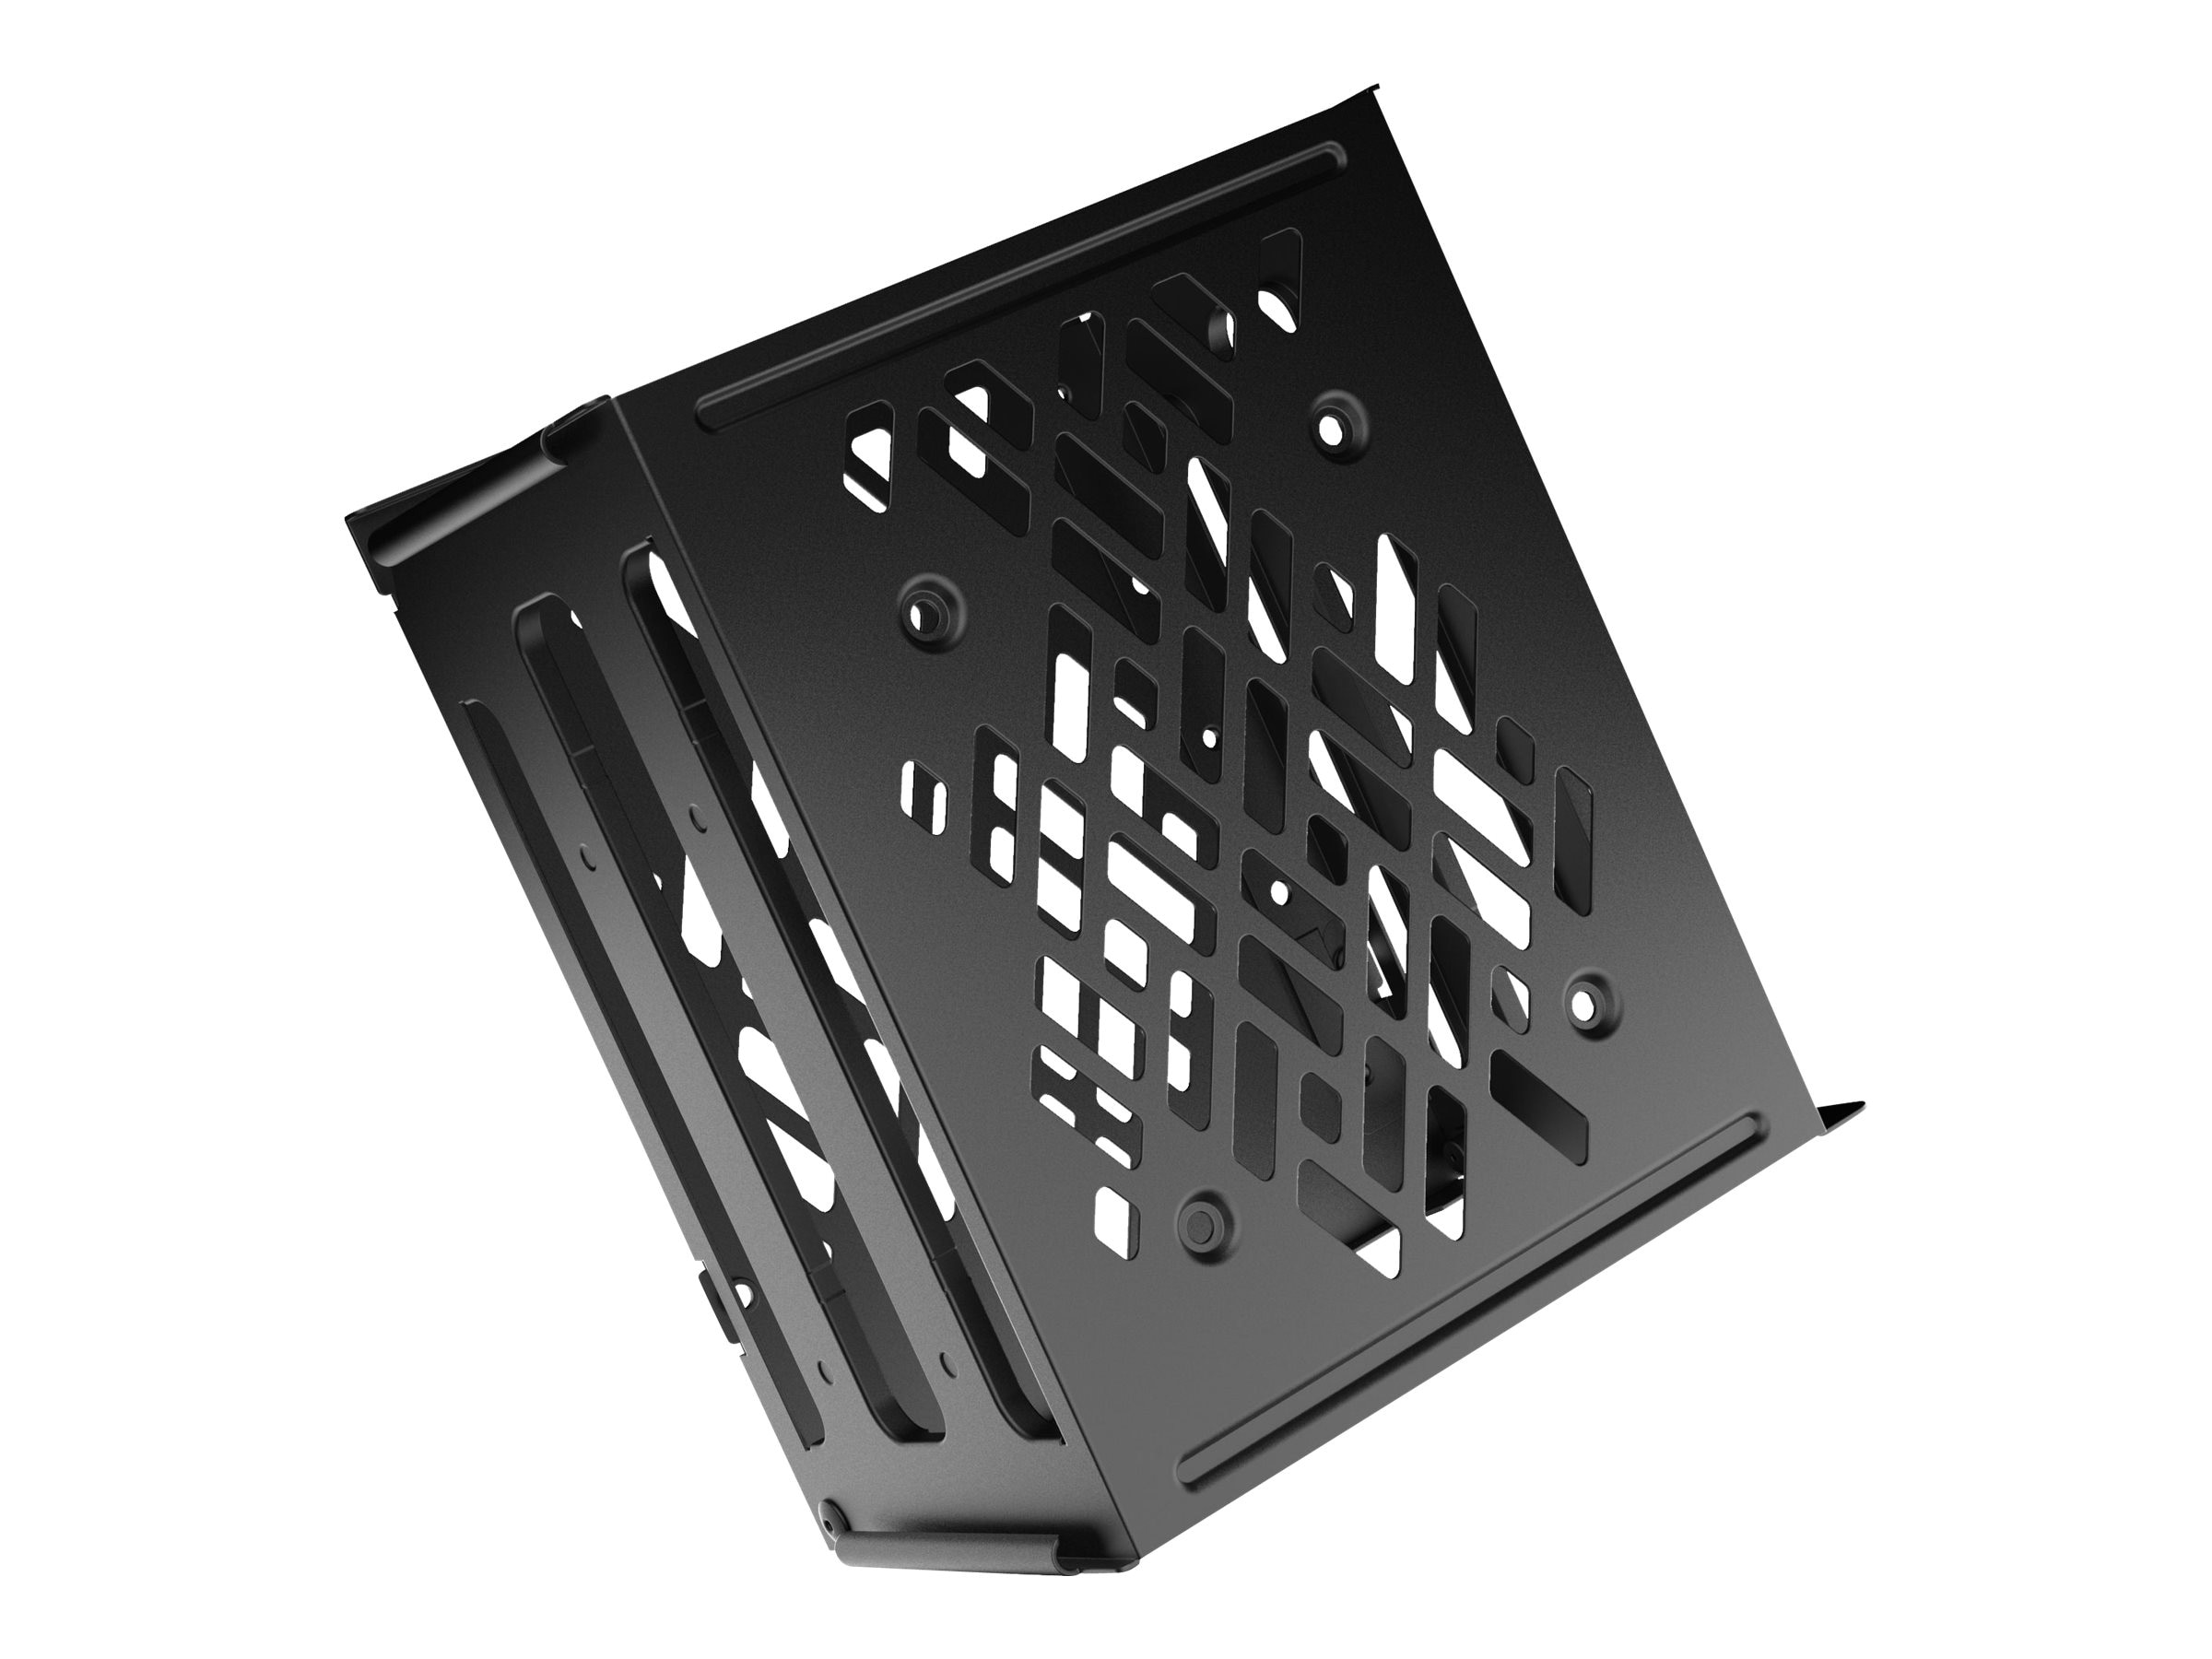 Fractal Design Hard Drive Cage Kit Type B - Black (FD-A-CAGE-001)